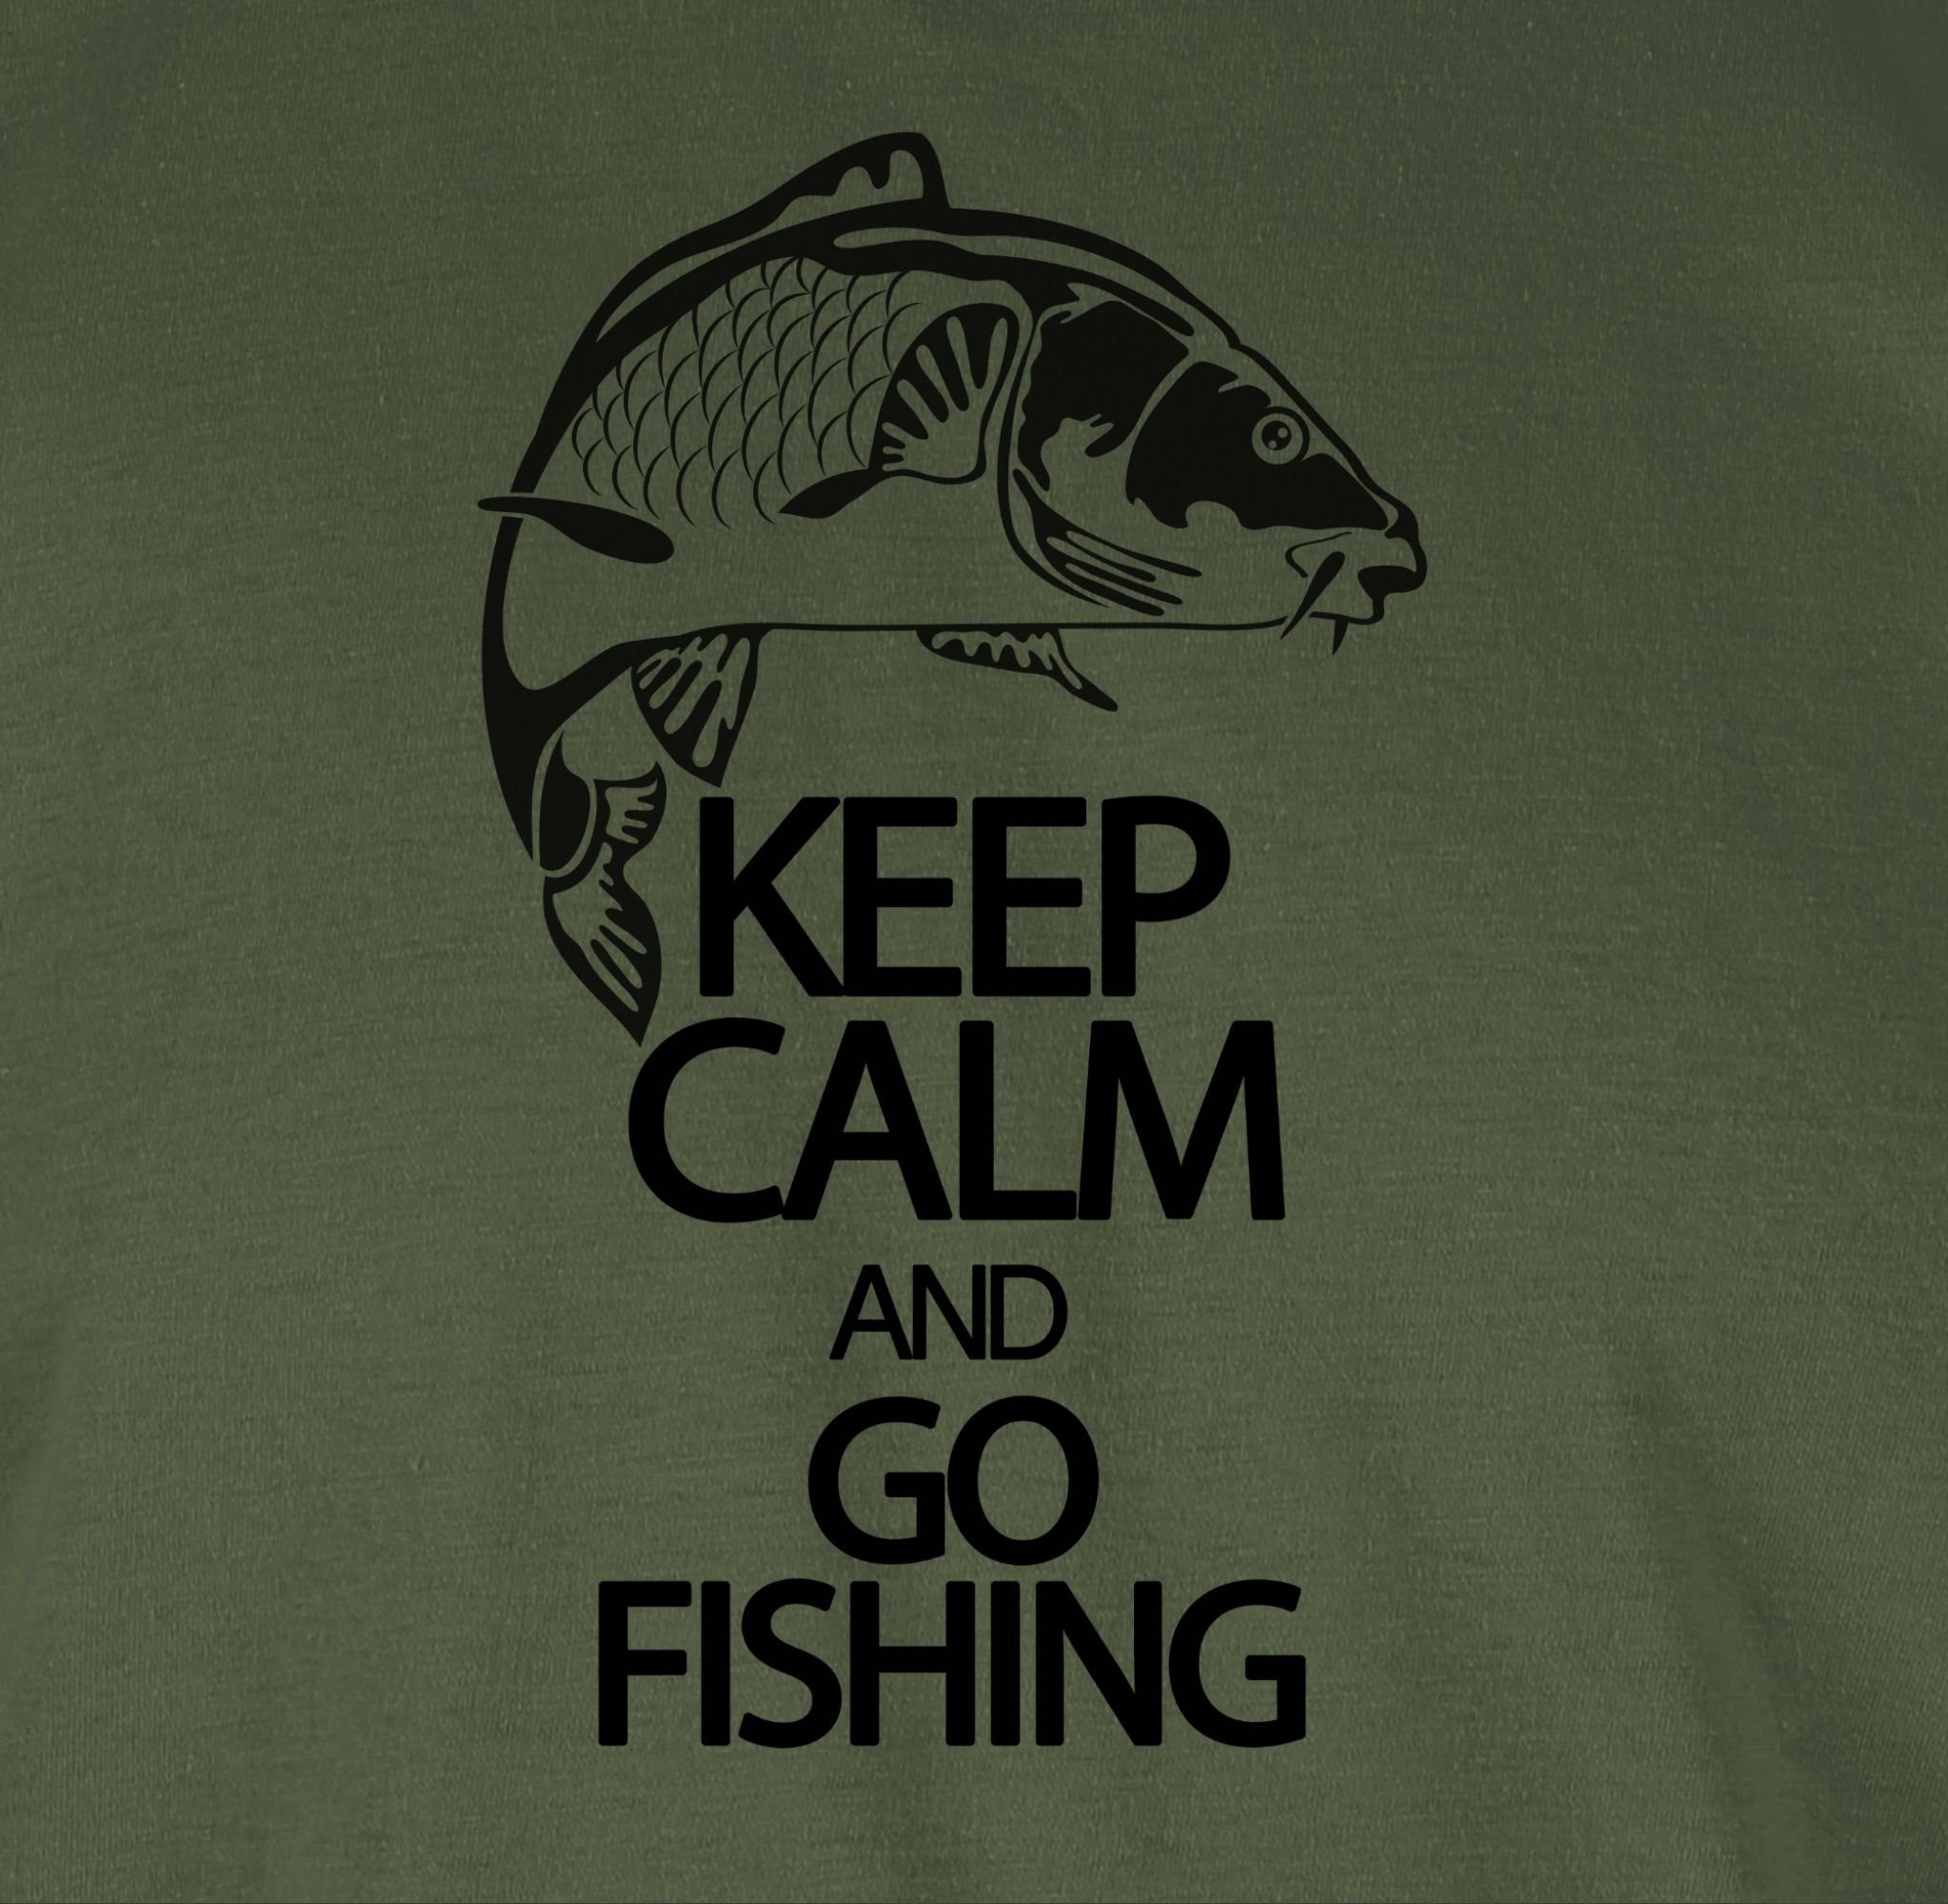 Fishing go and Angler Shirtracer T-Shirt Grün Geschenke Keep calm 1 Army